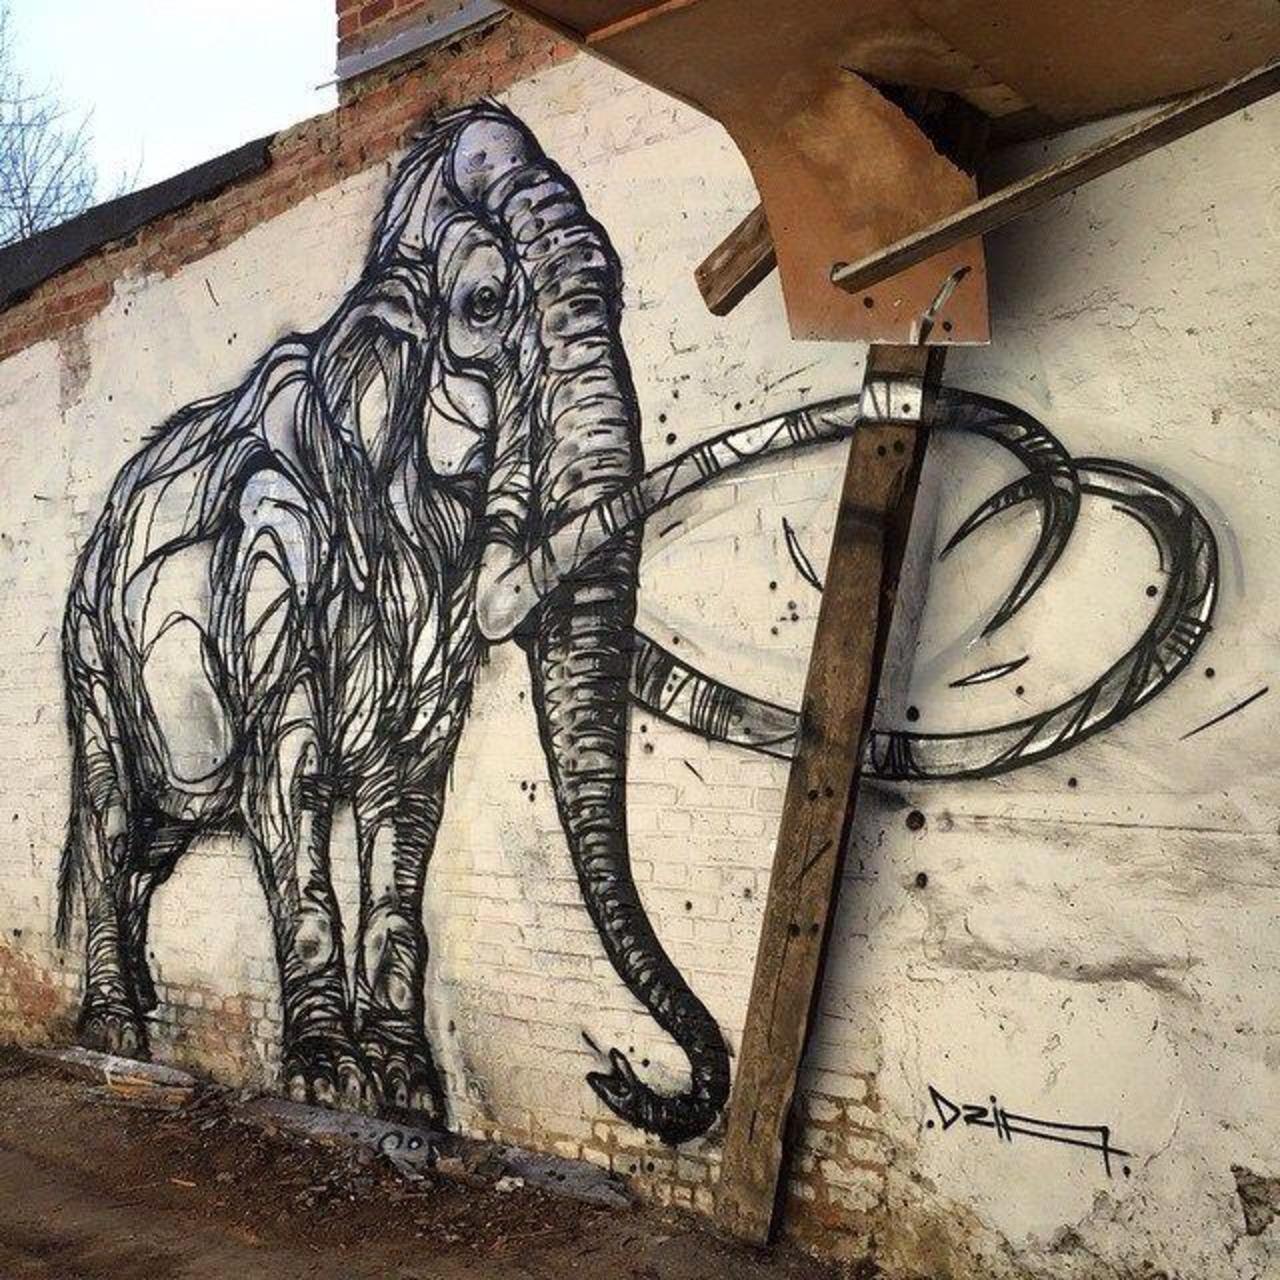 Mammoth. New nature in Street Art wall by DZIA 

#art #graffiti #mural #streetart http://t.co/IGaBi33dY7